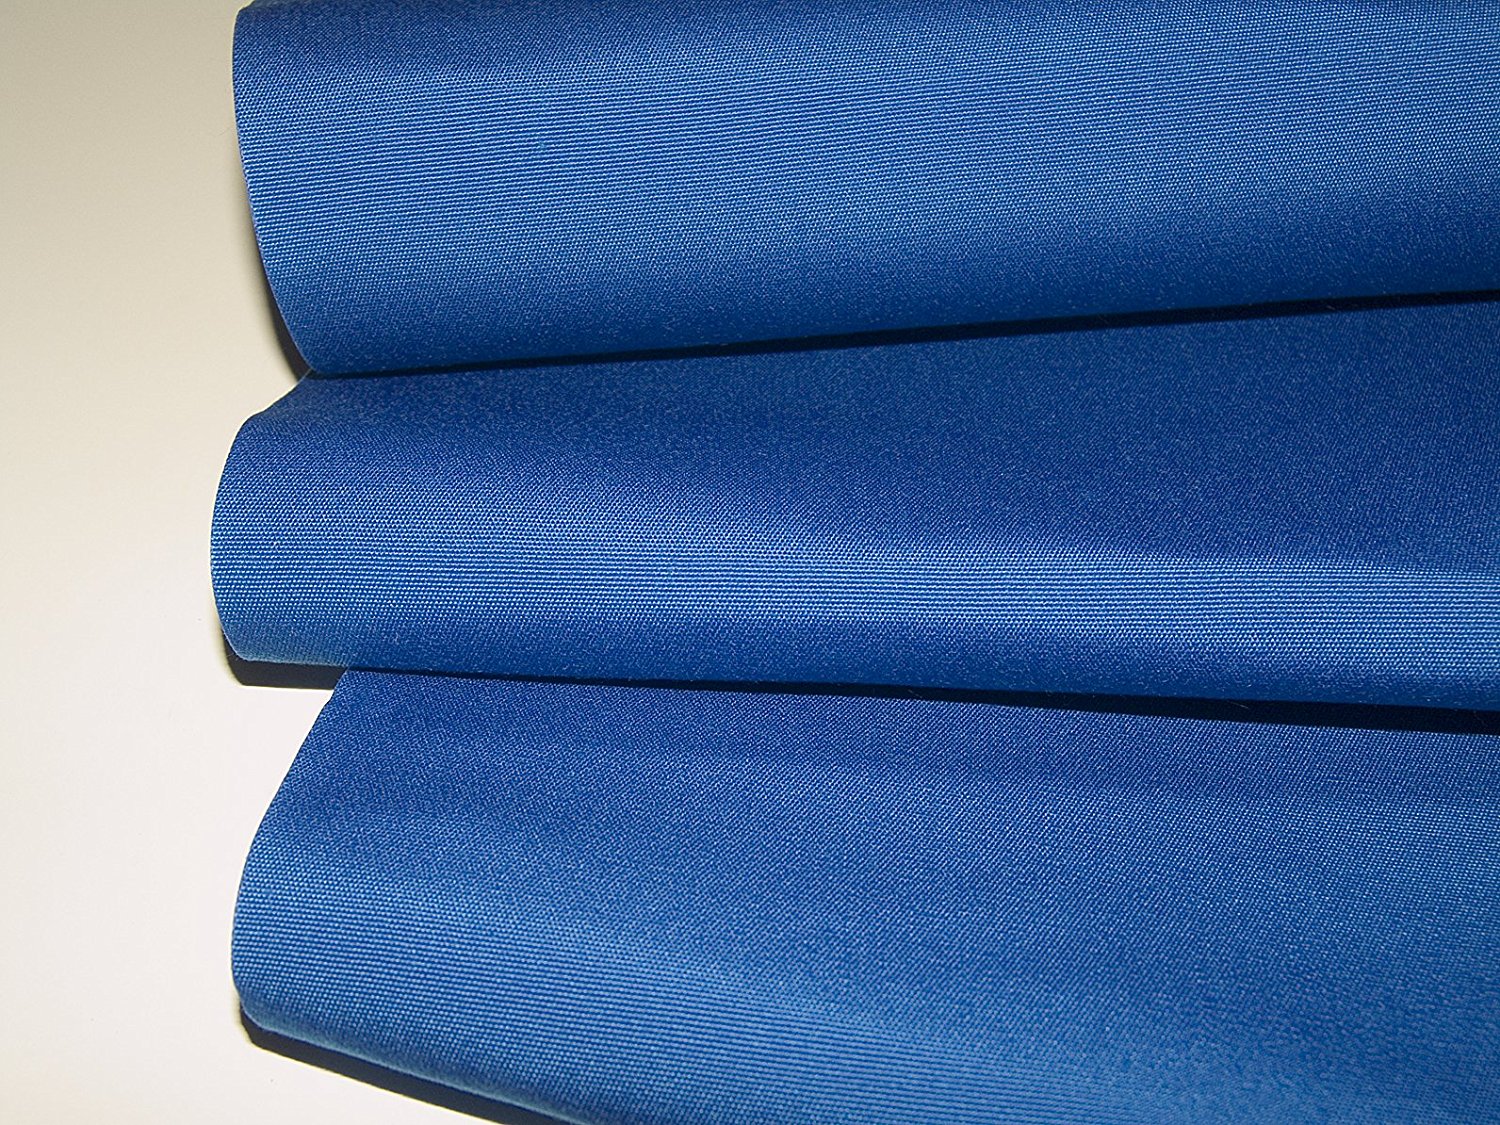 Buy Aqualon Edge Atlantic Blue 5944 Marine Fabric by the Yard